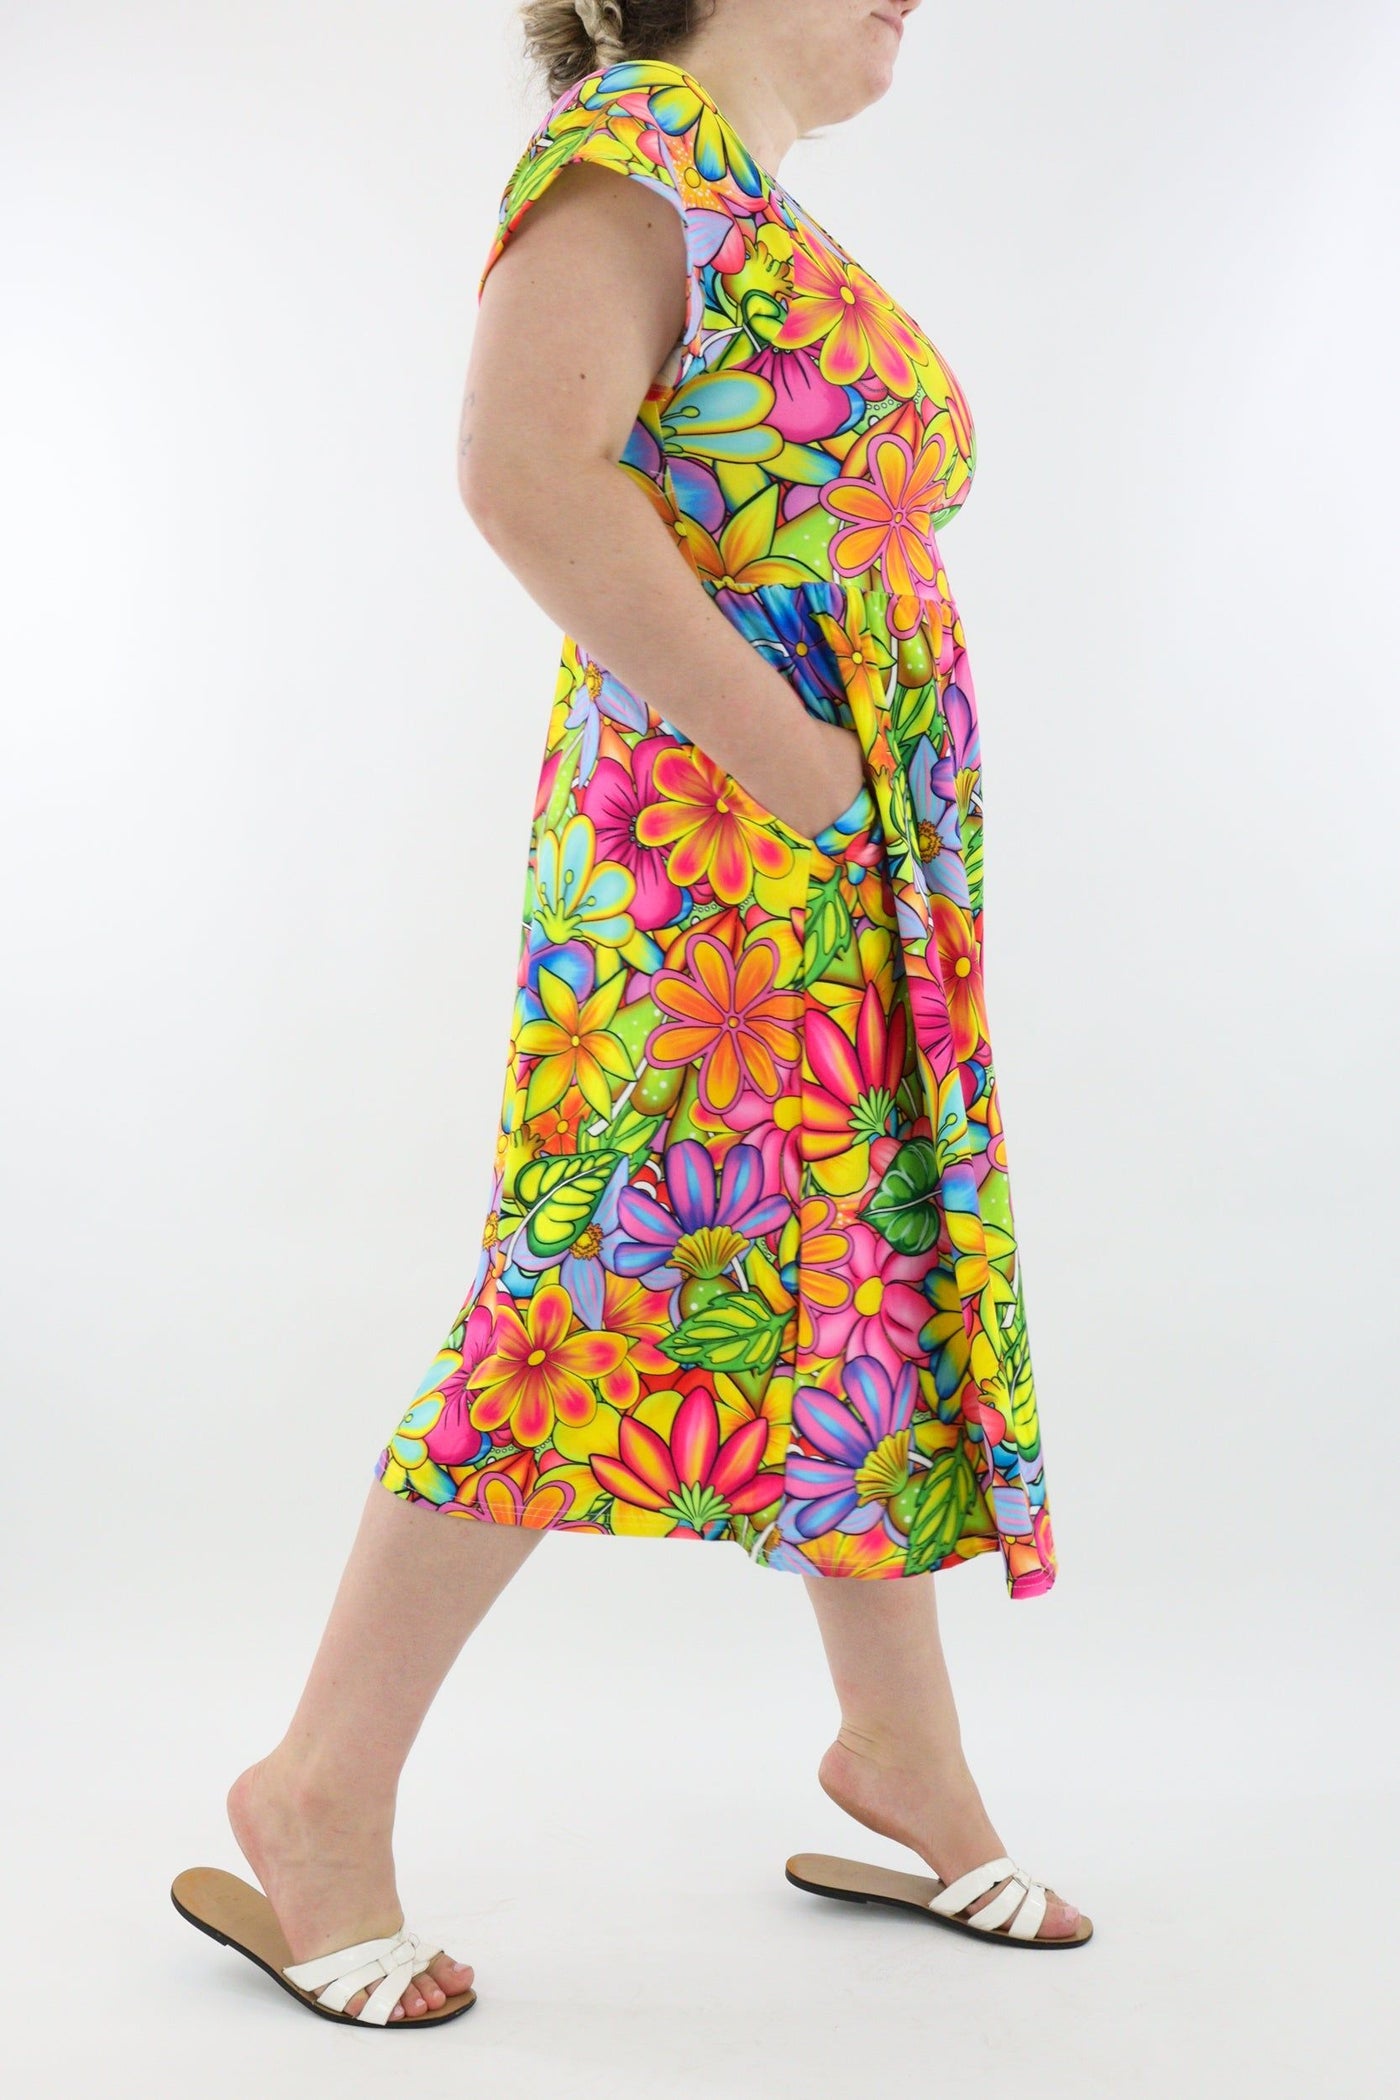 Tutti Frutti Flower - A-Line Dress - Midi Length - Side Pockets - Pawlie